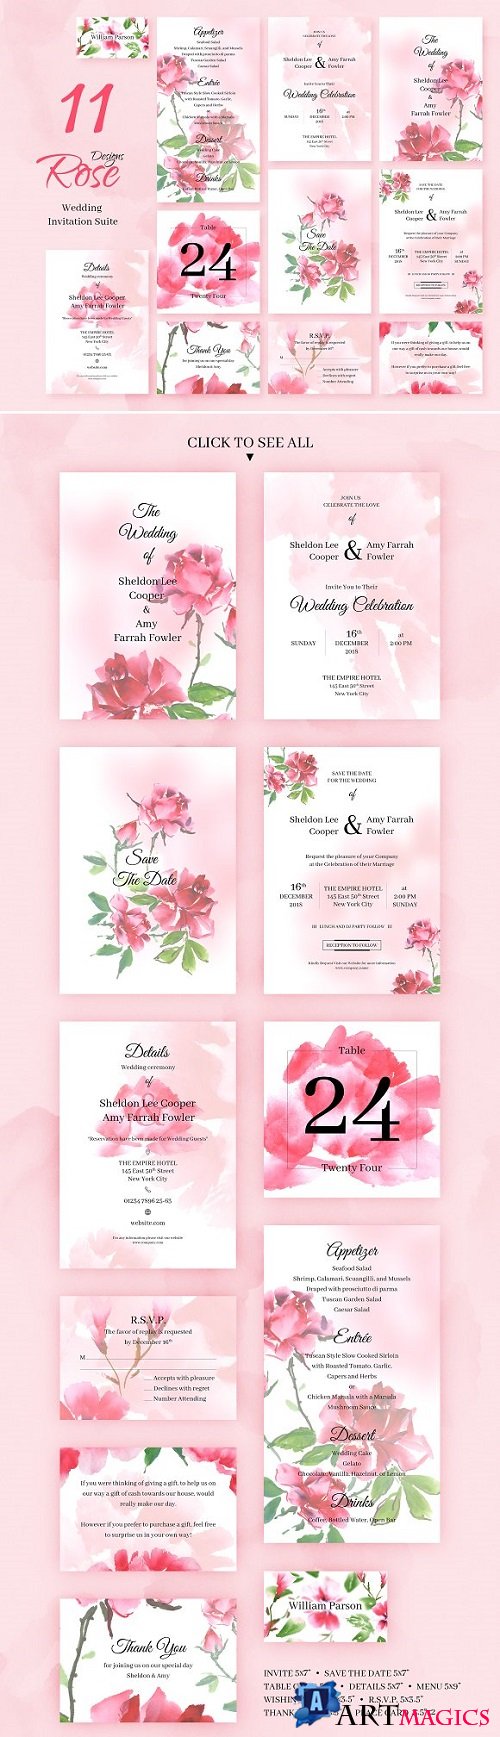 Rose Wedding Invitation Package 2219020